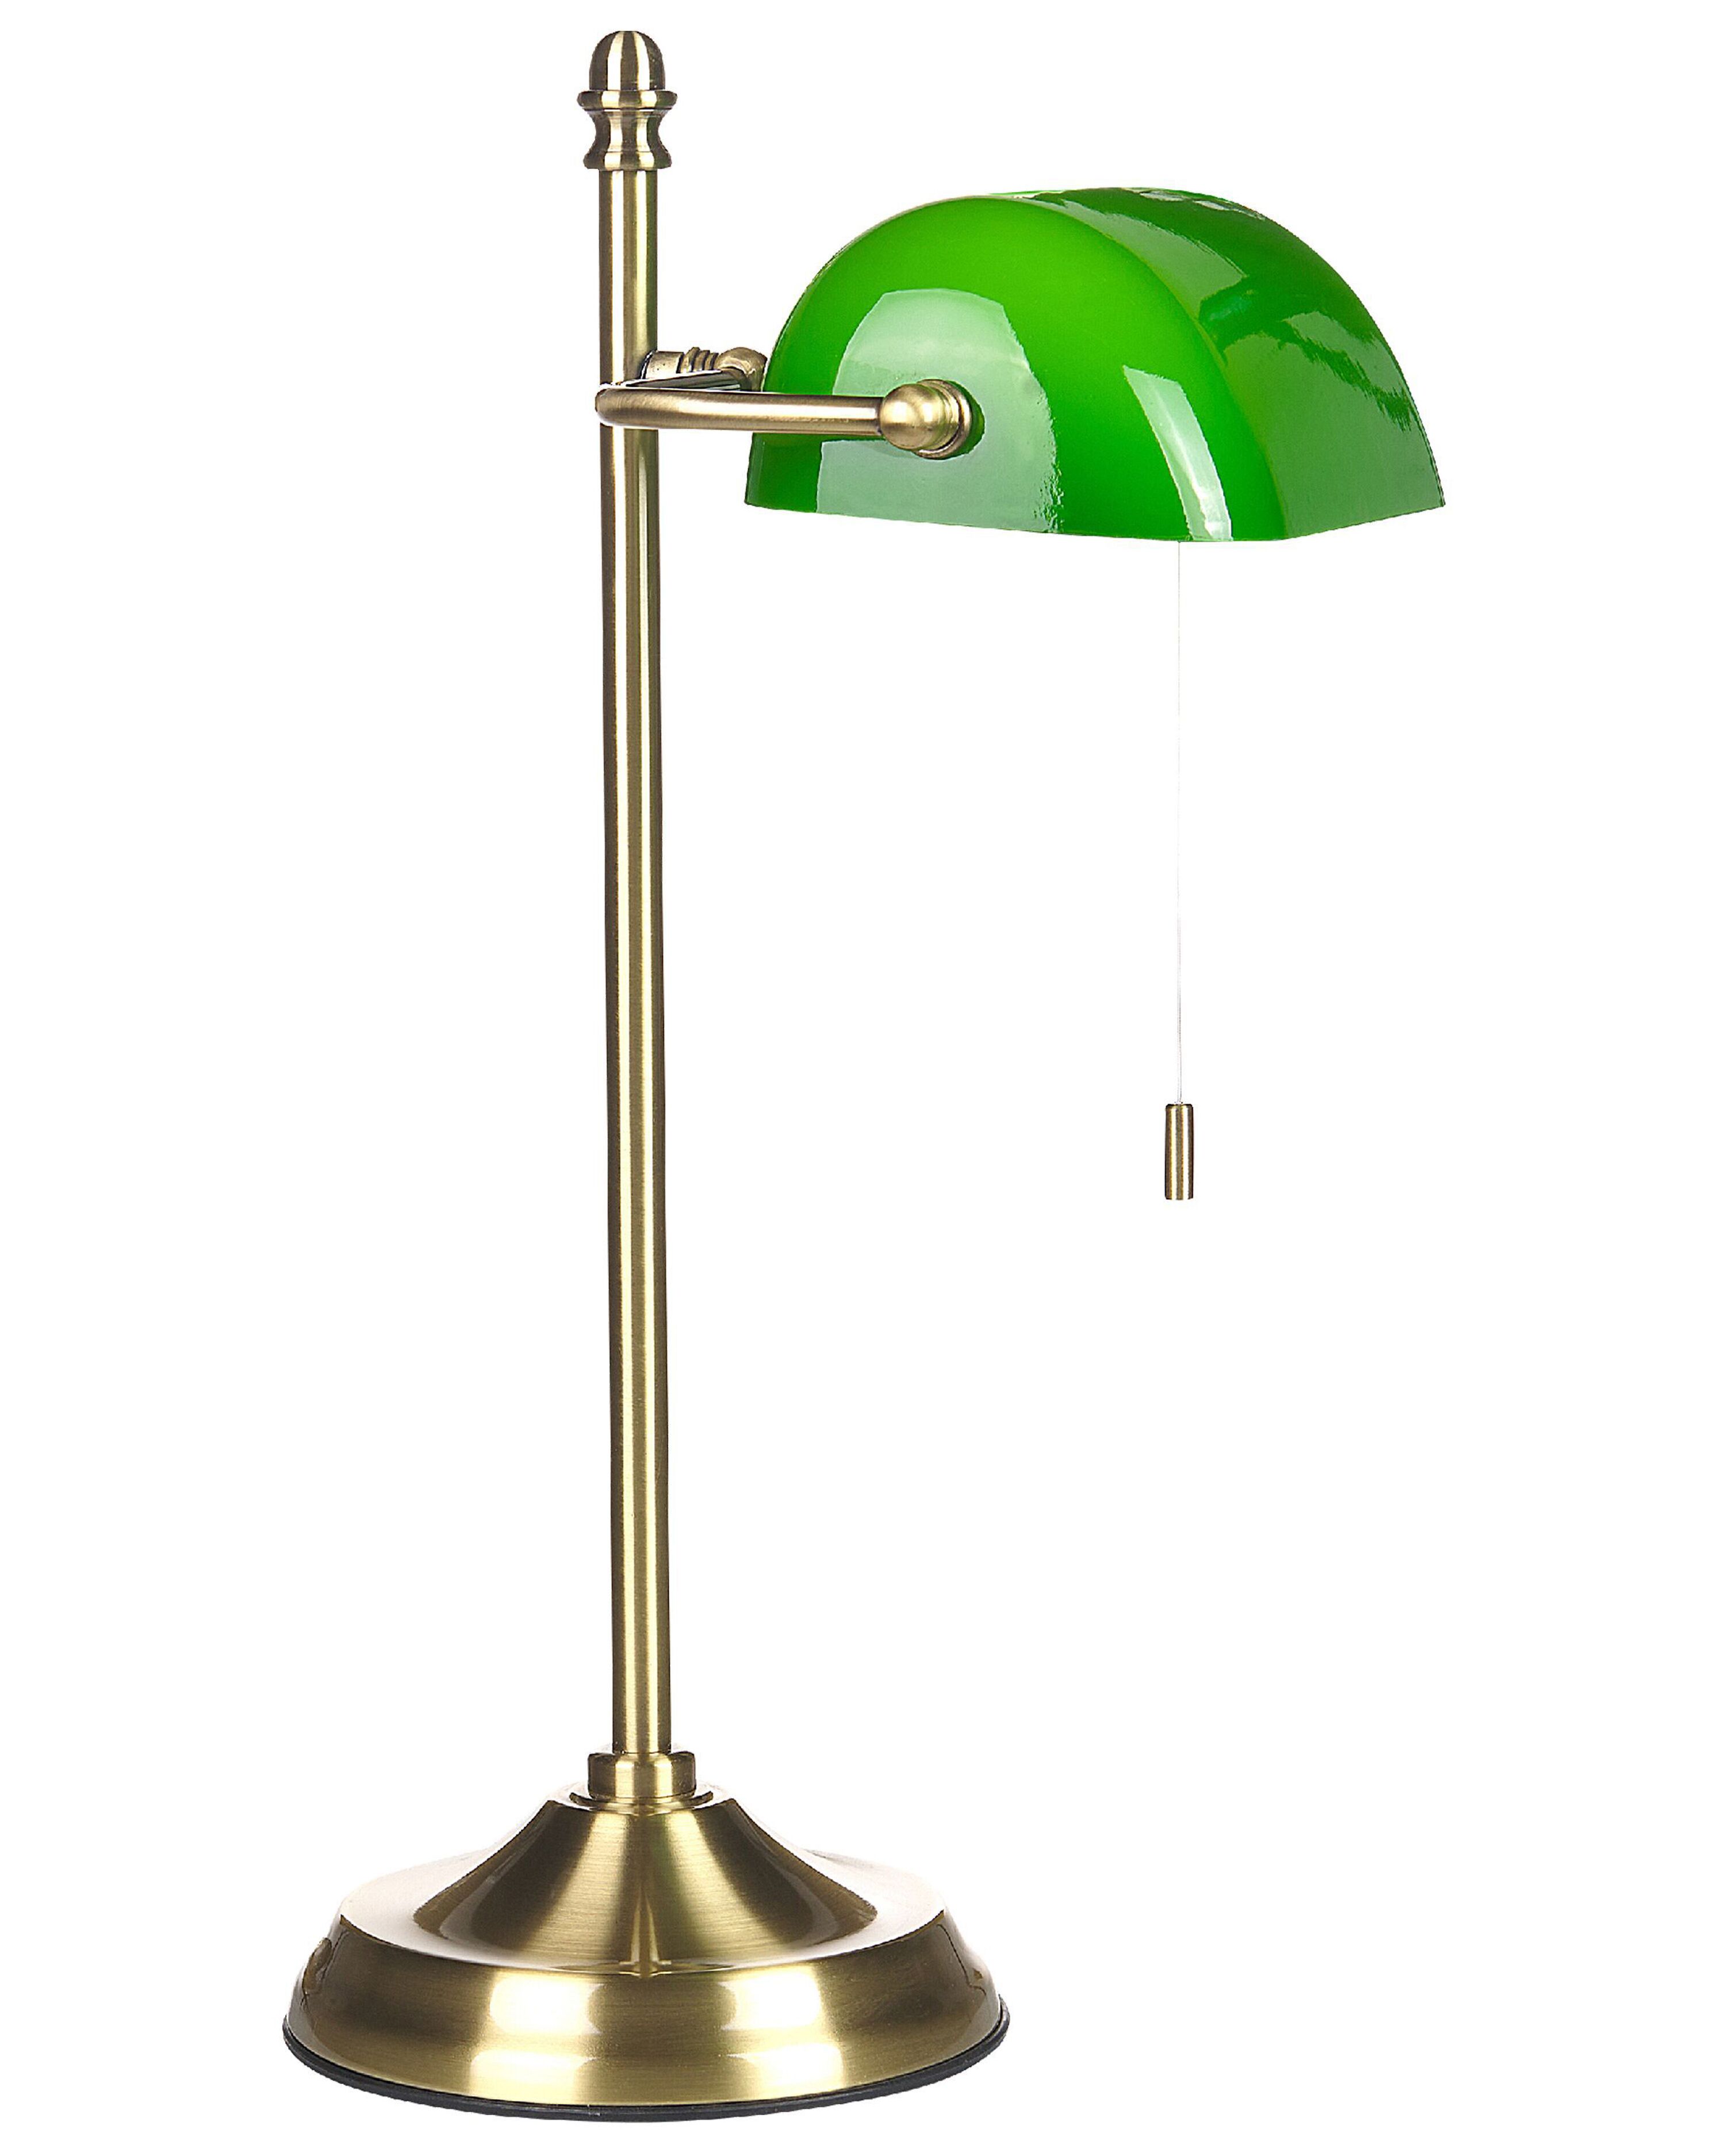 Metal Banker's Lamp Green and Gold MARAVAL